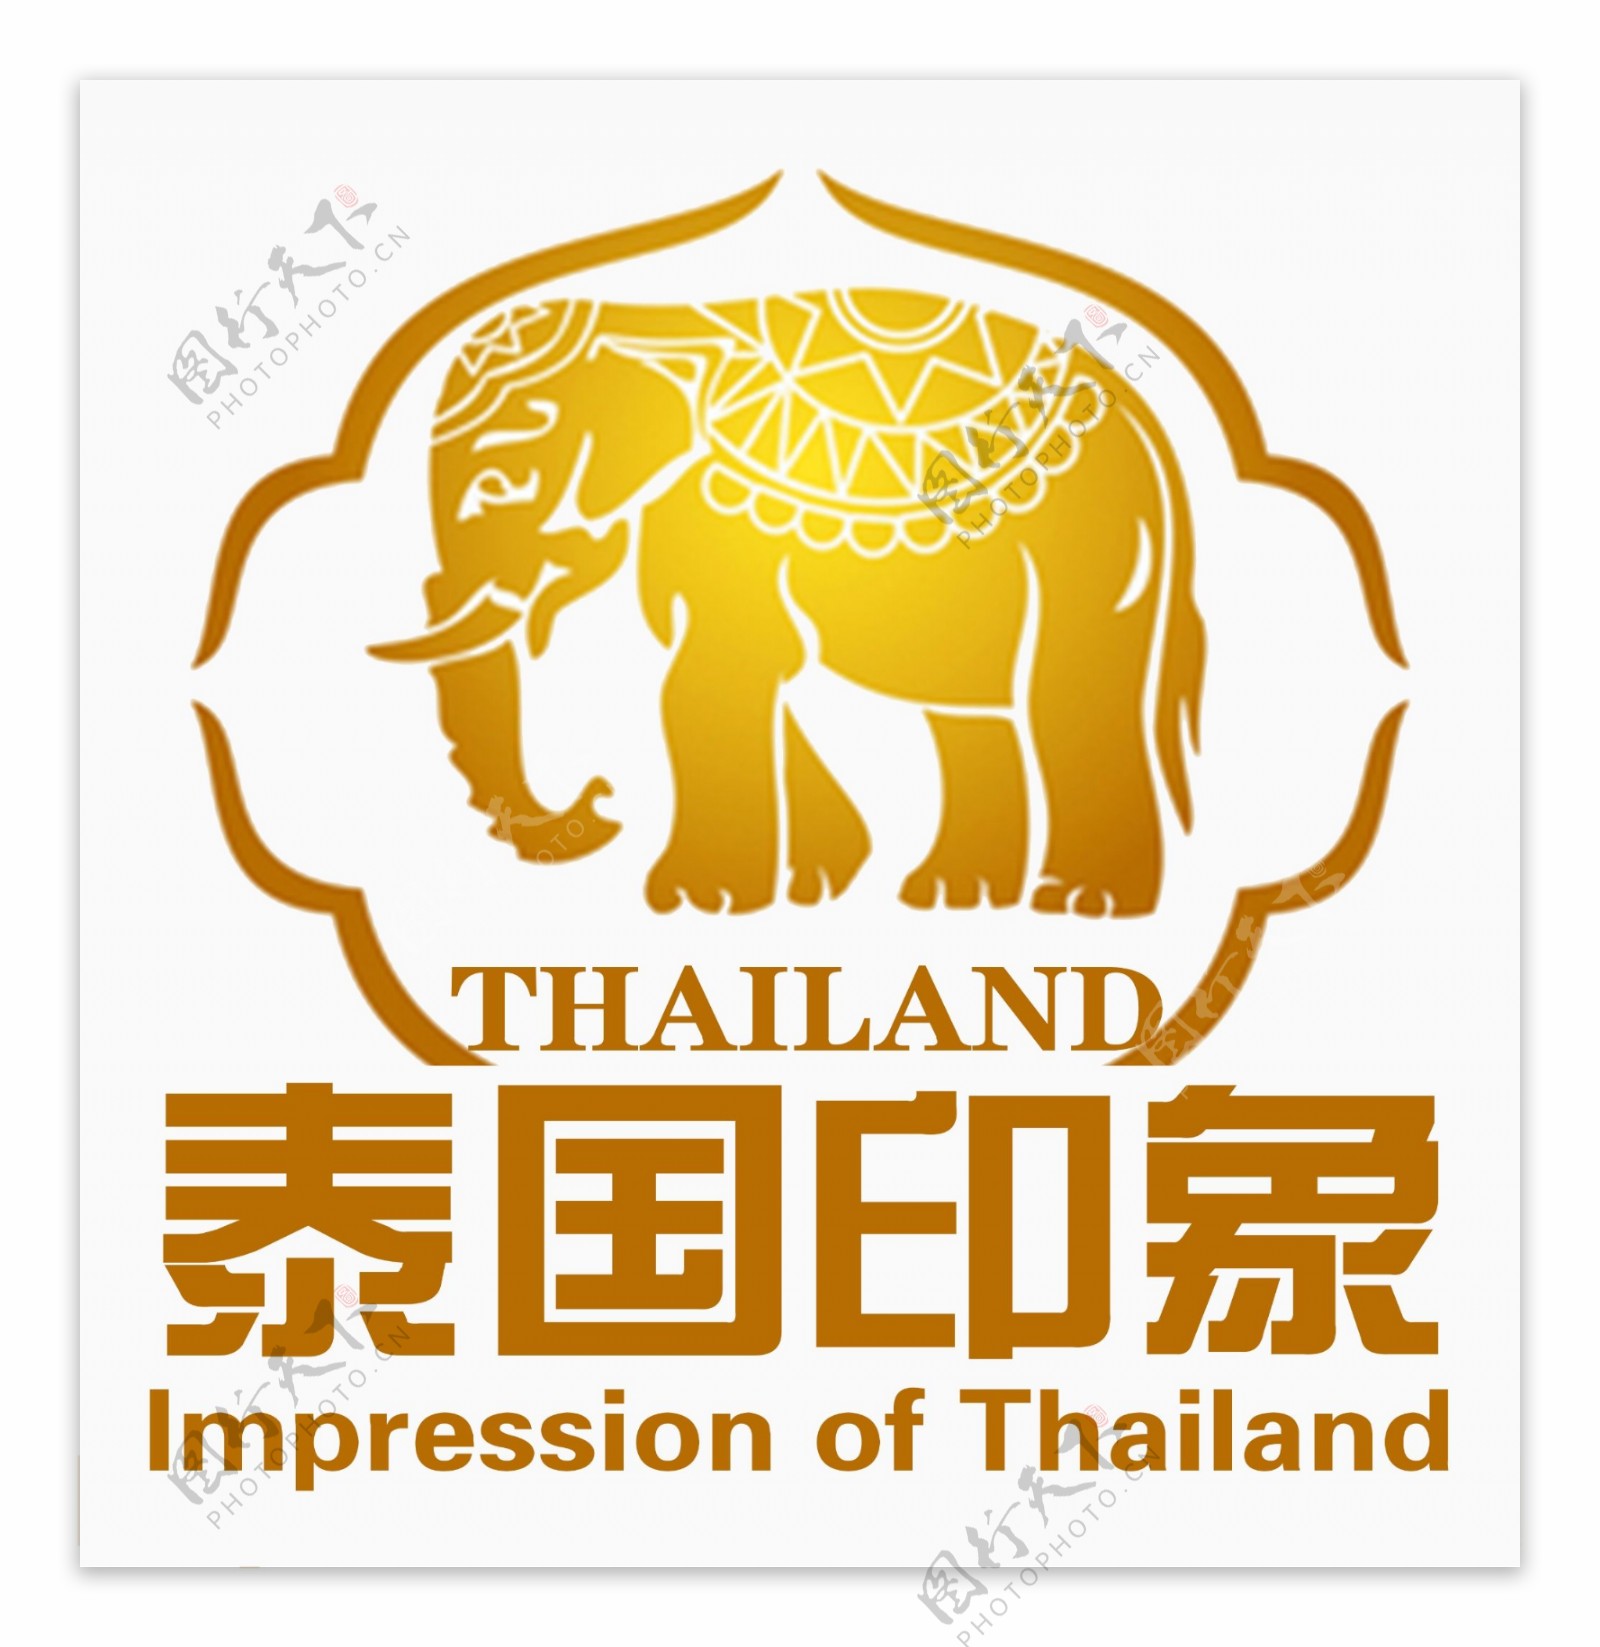 logo泰国印象2016423